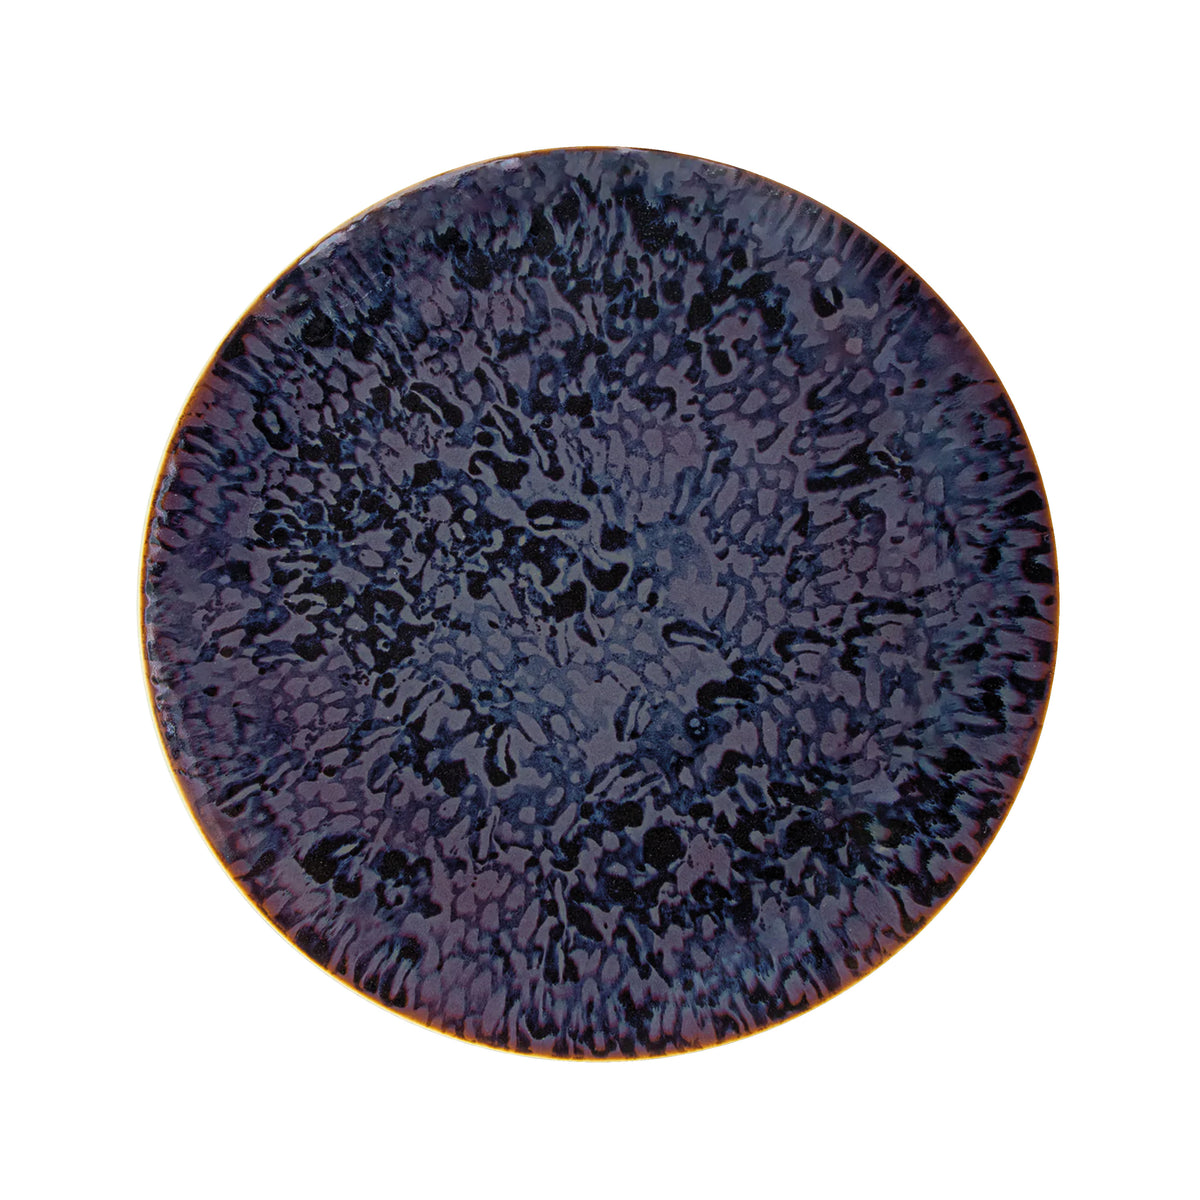 KASHMIR color net - Dinner plate